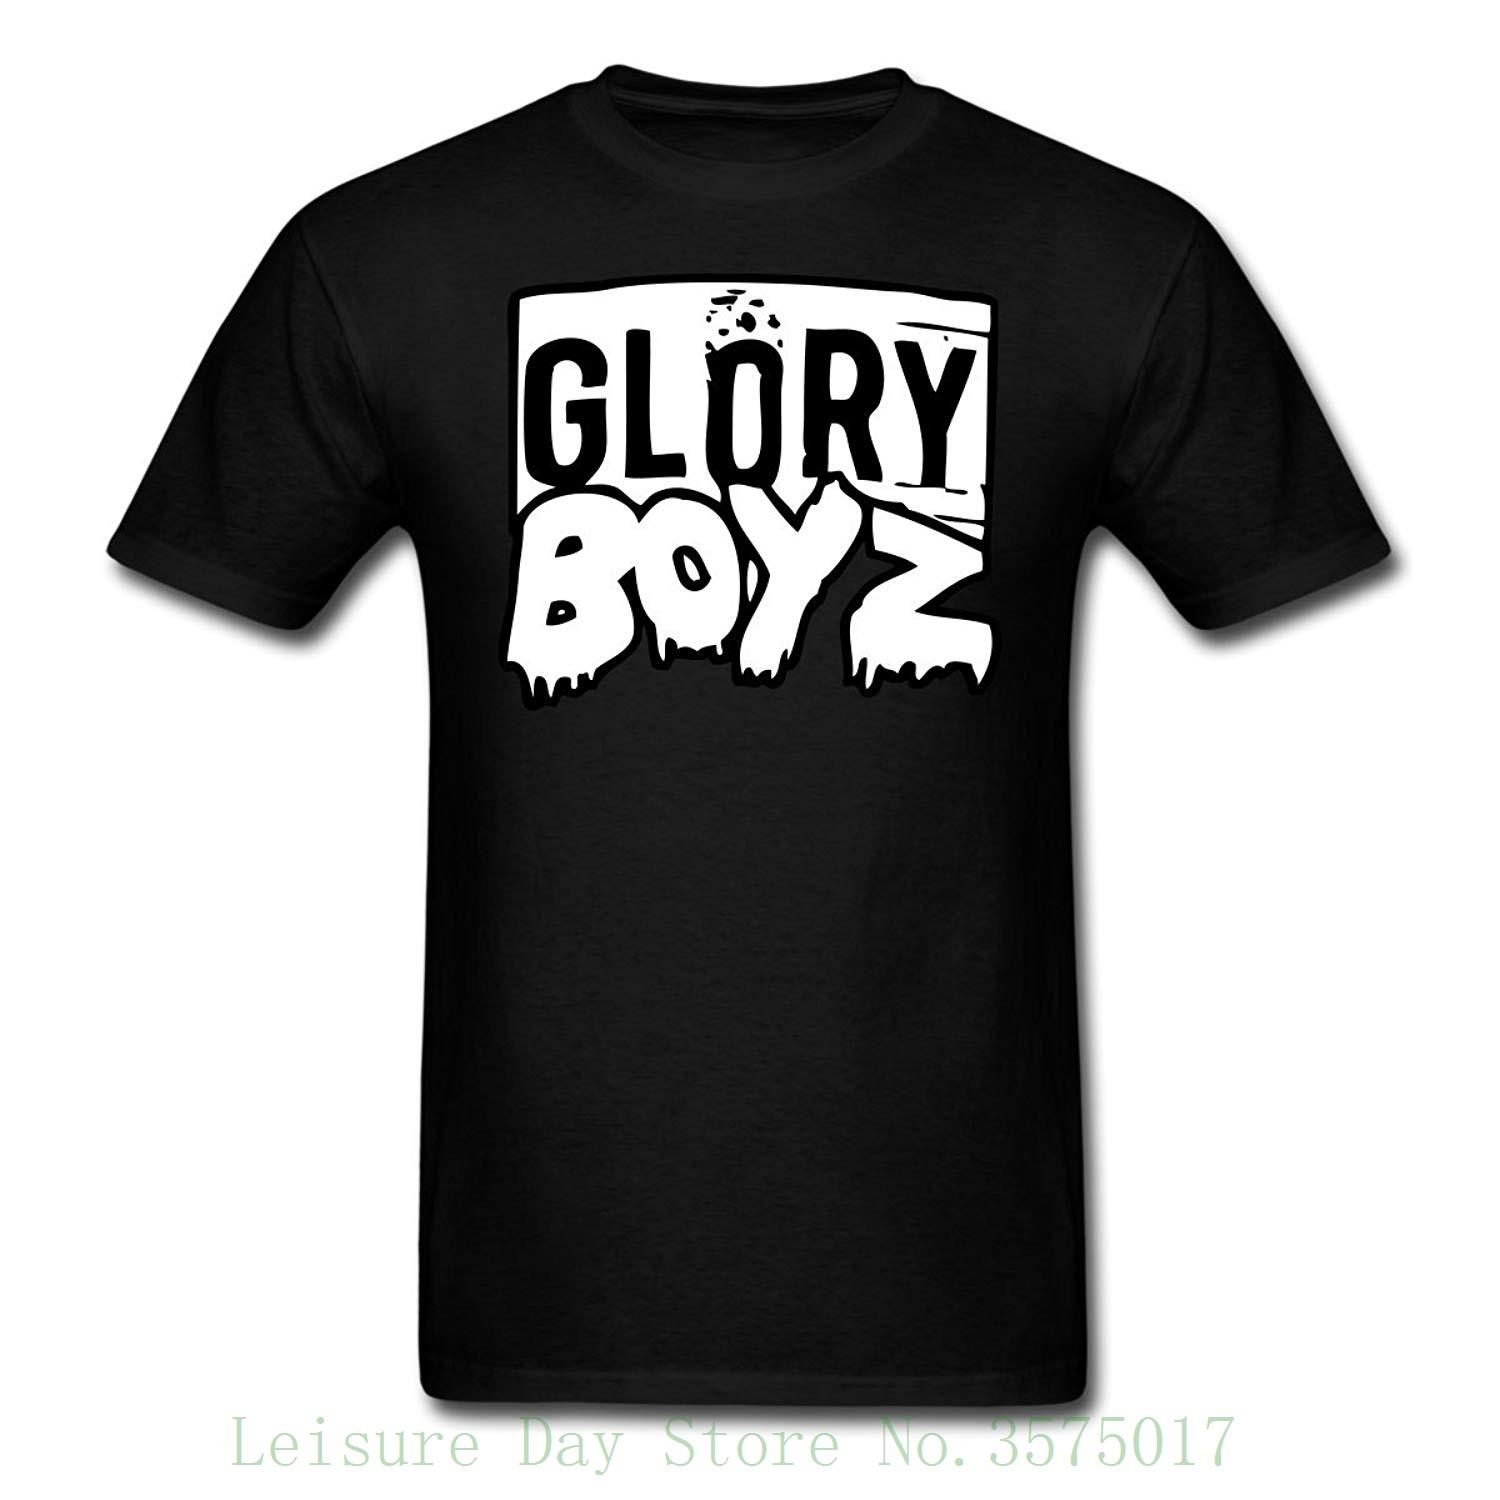 GBE Logo - Glory Boyz Gbe Logo Mp Men S T Shirt Good Quality Brand Cotton Shirt Summer Style Cool Shirts